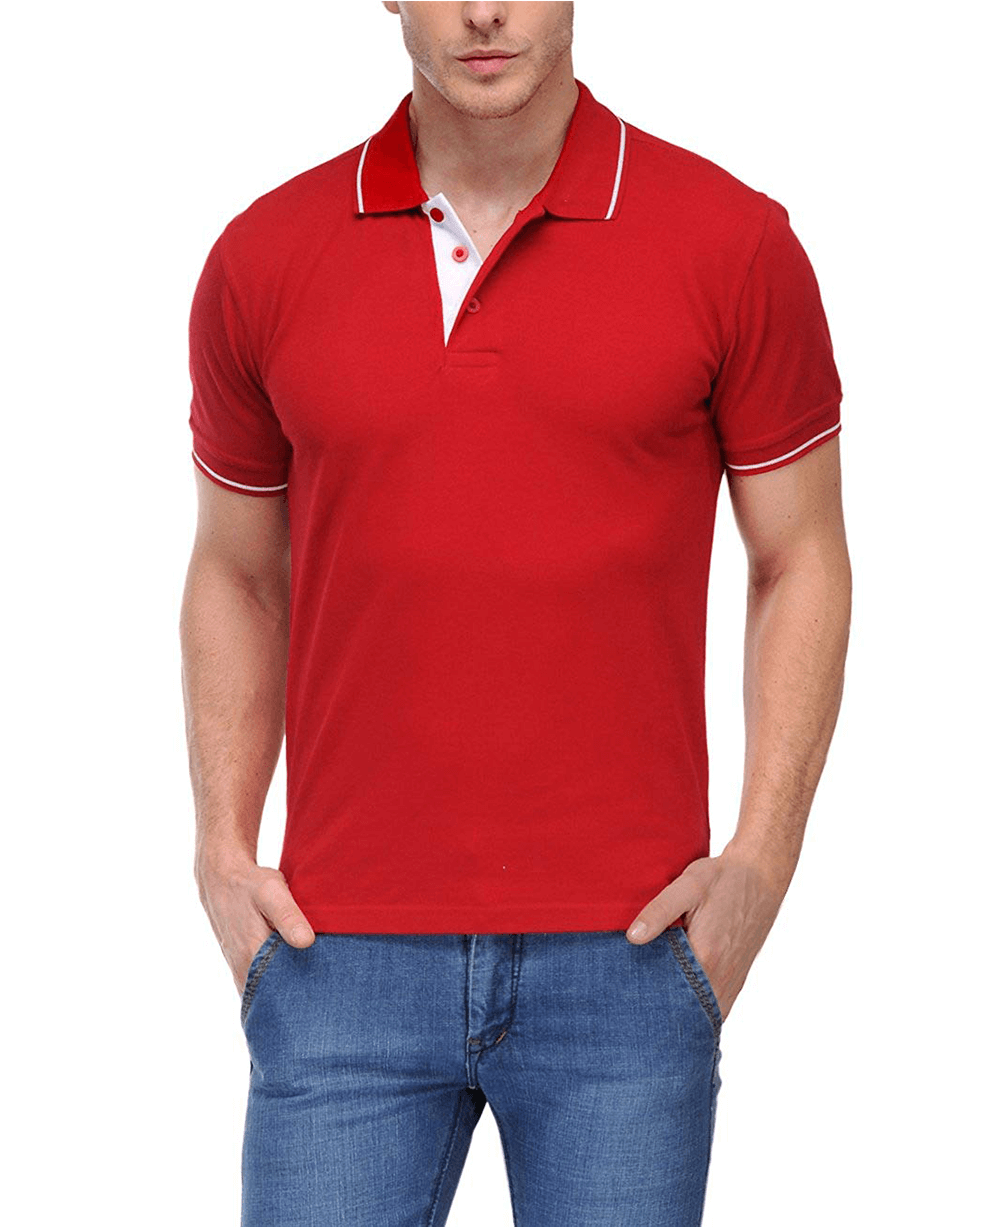 Scott Polo T Shirts - Printstreet